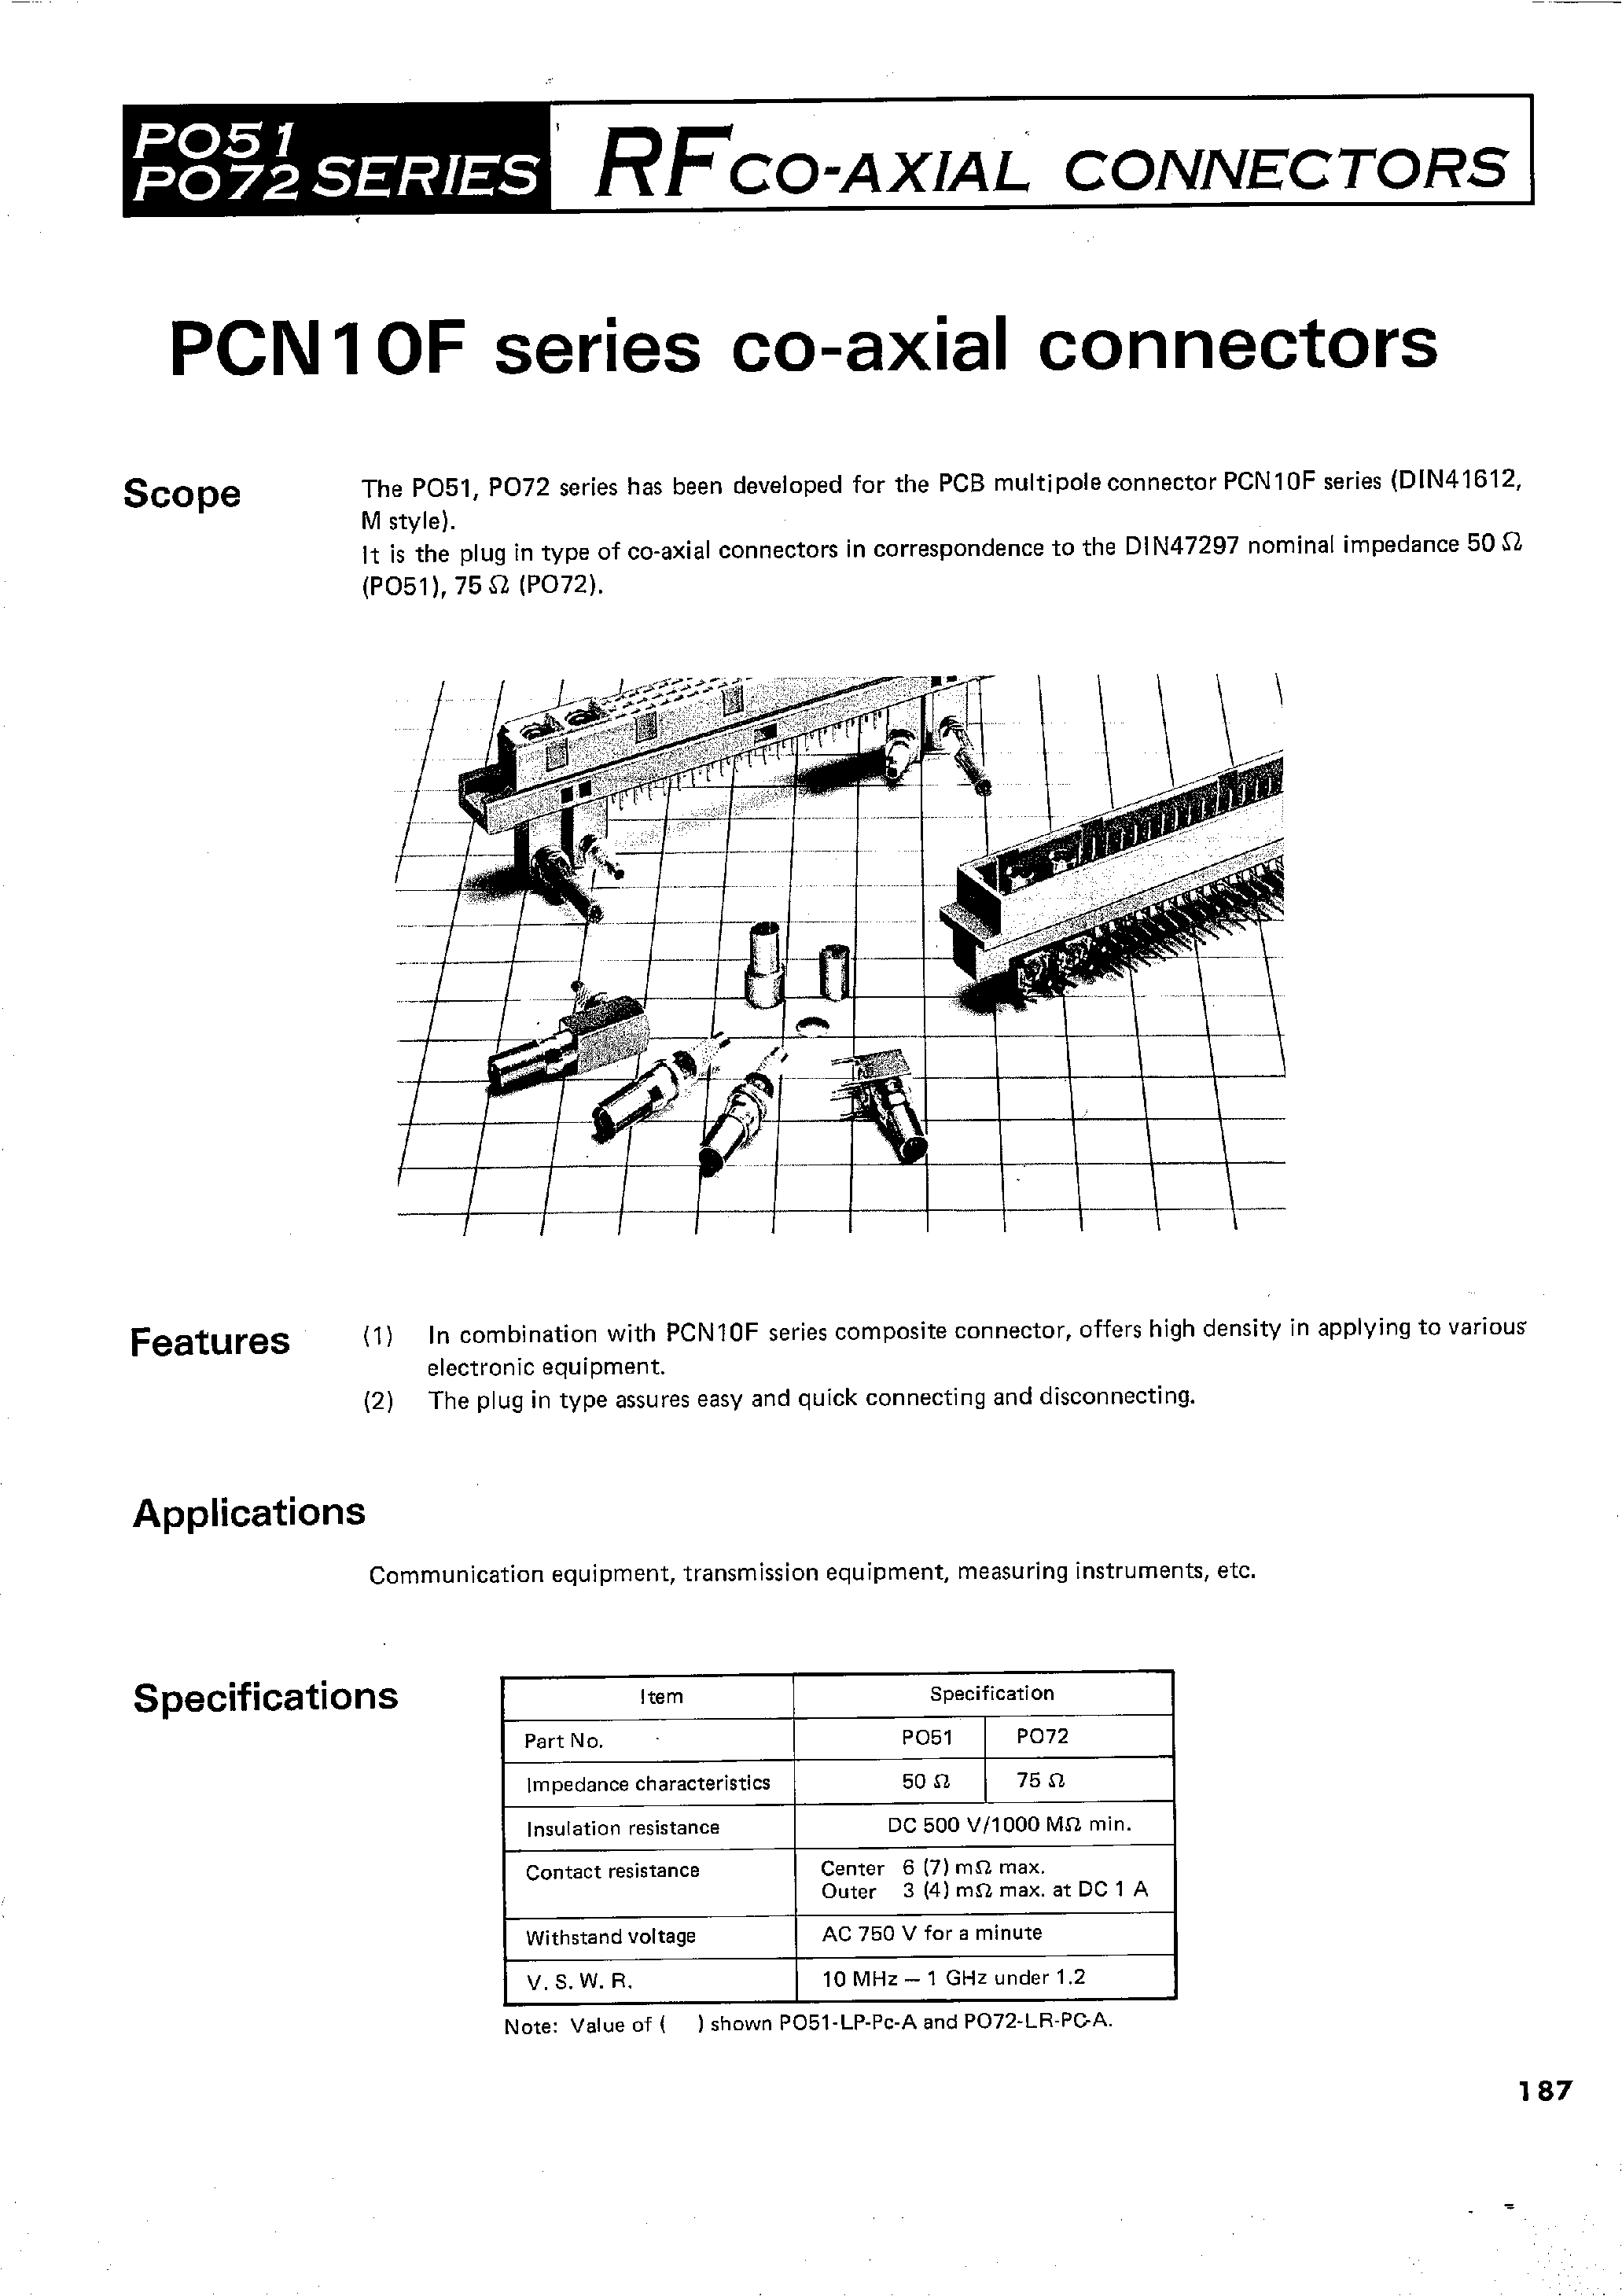 Даташит PO51J-T-1S - RFCO-AXIAL CONNECTORS страница 1